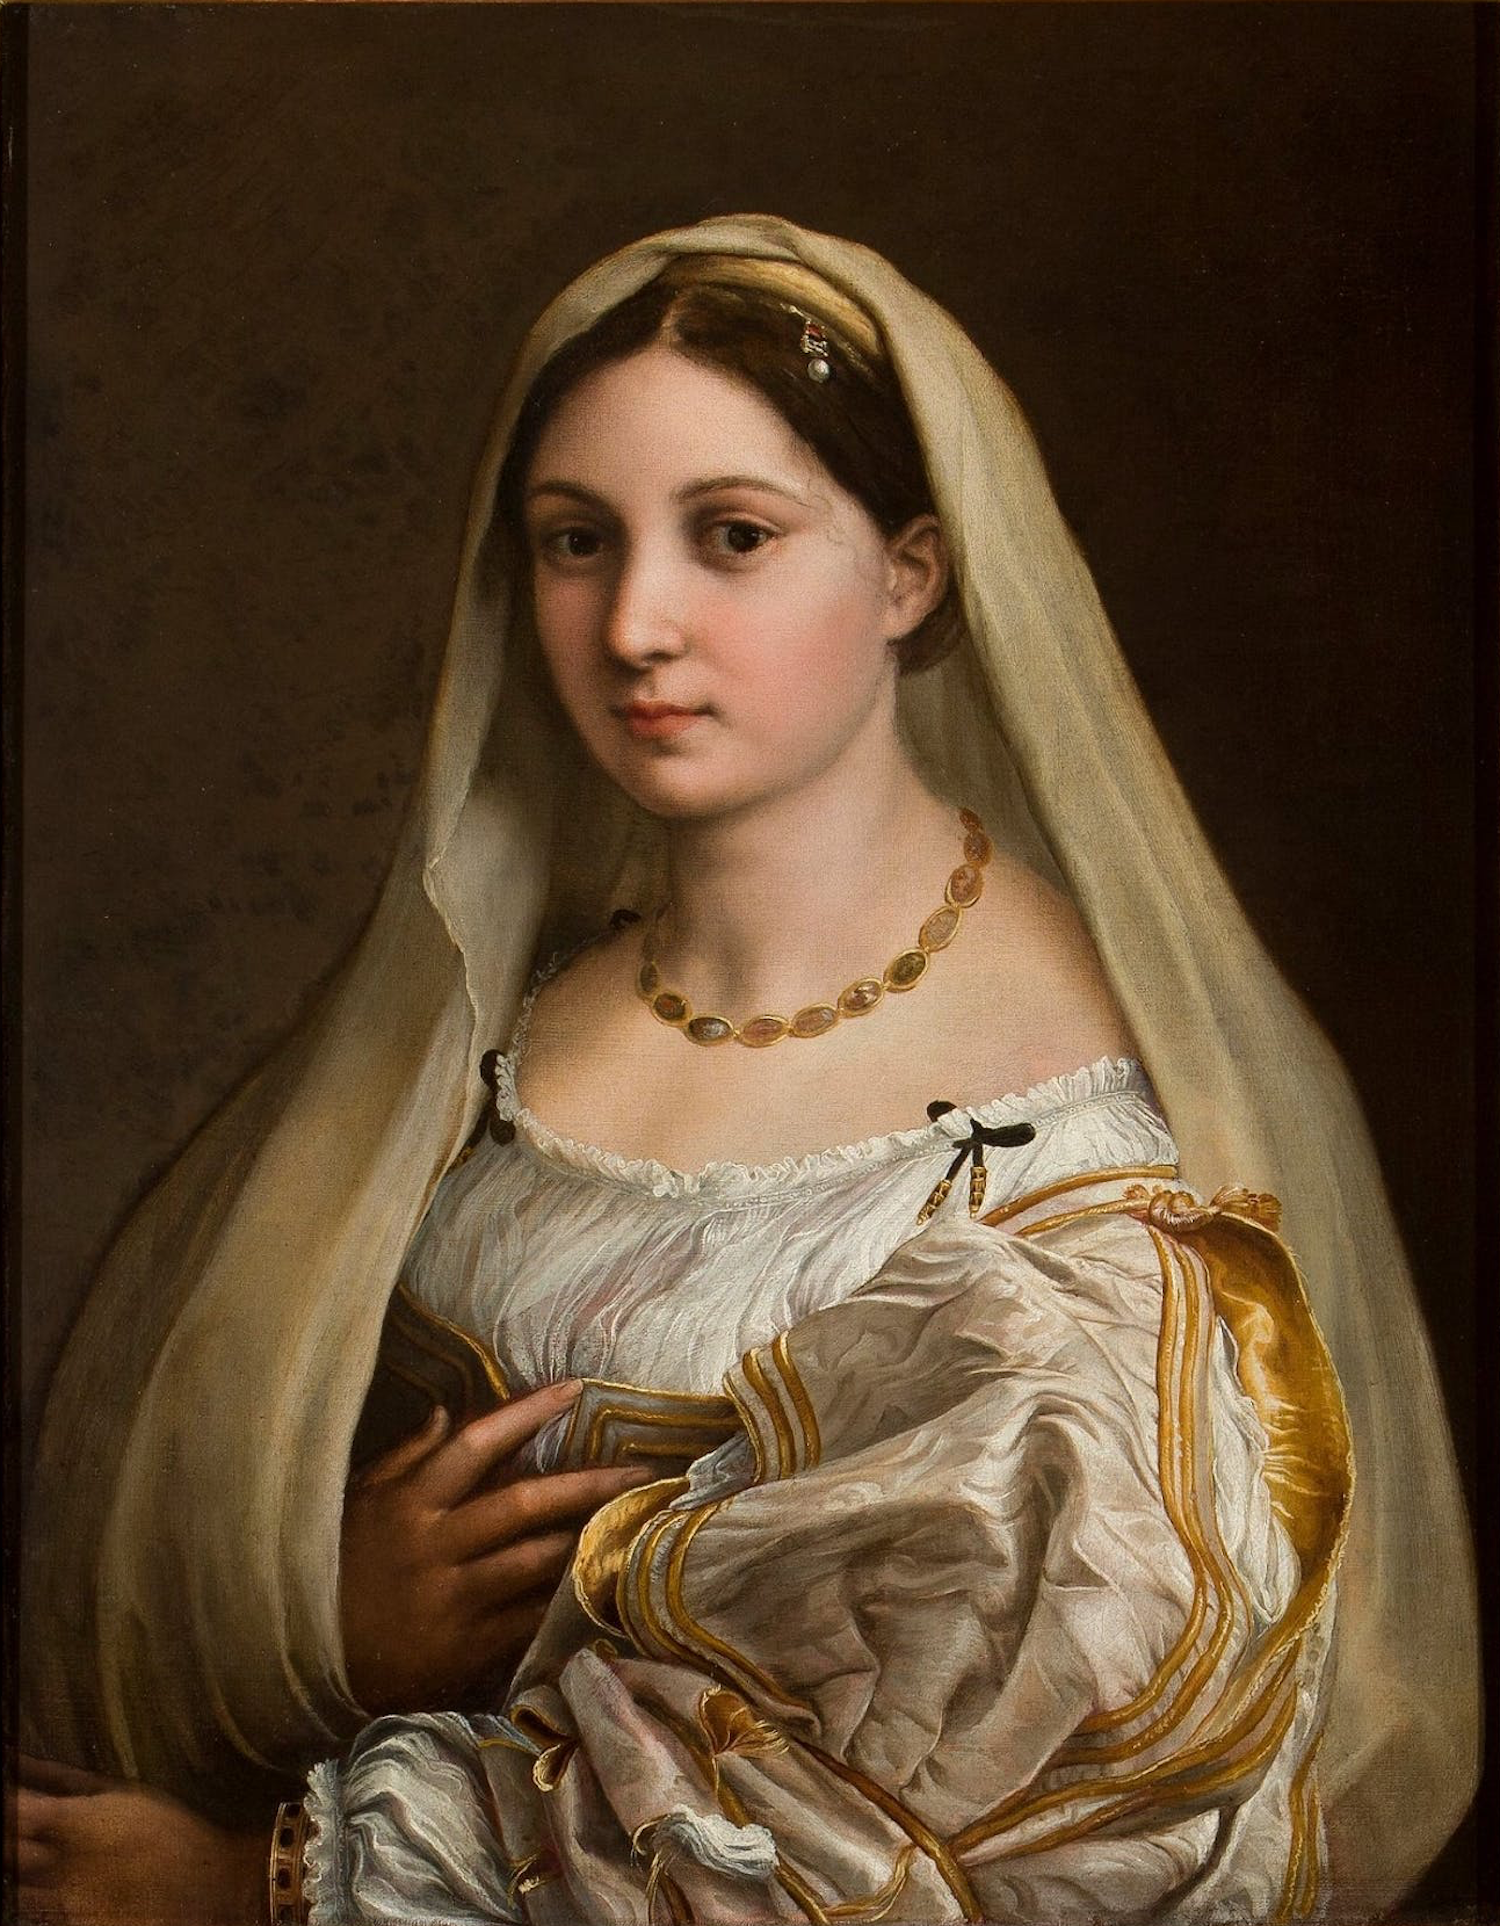 Woman with a Veil - La Velata by Raphael Santi - 1512-1515 - 82 - 61 cm Palazzo Pitti